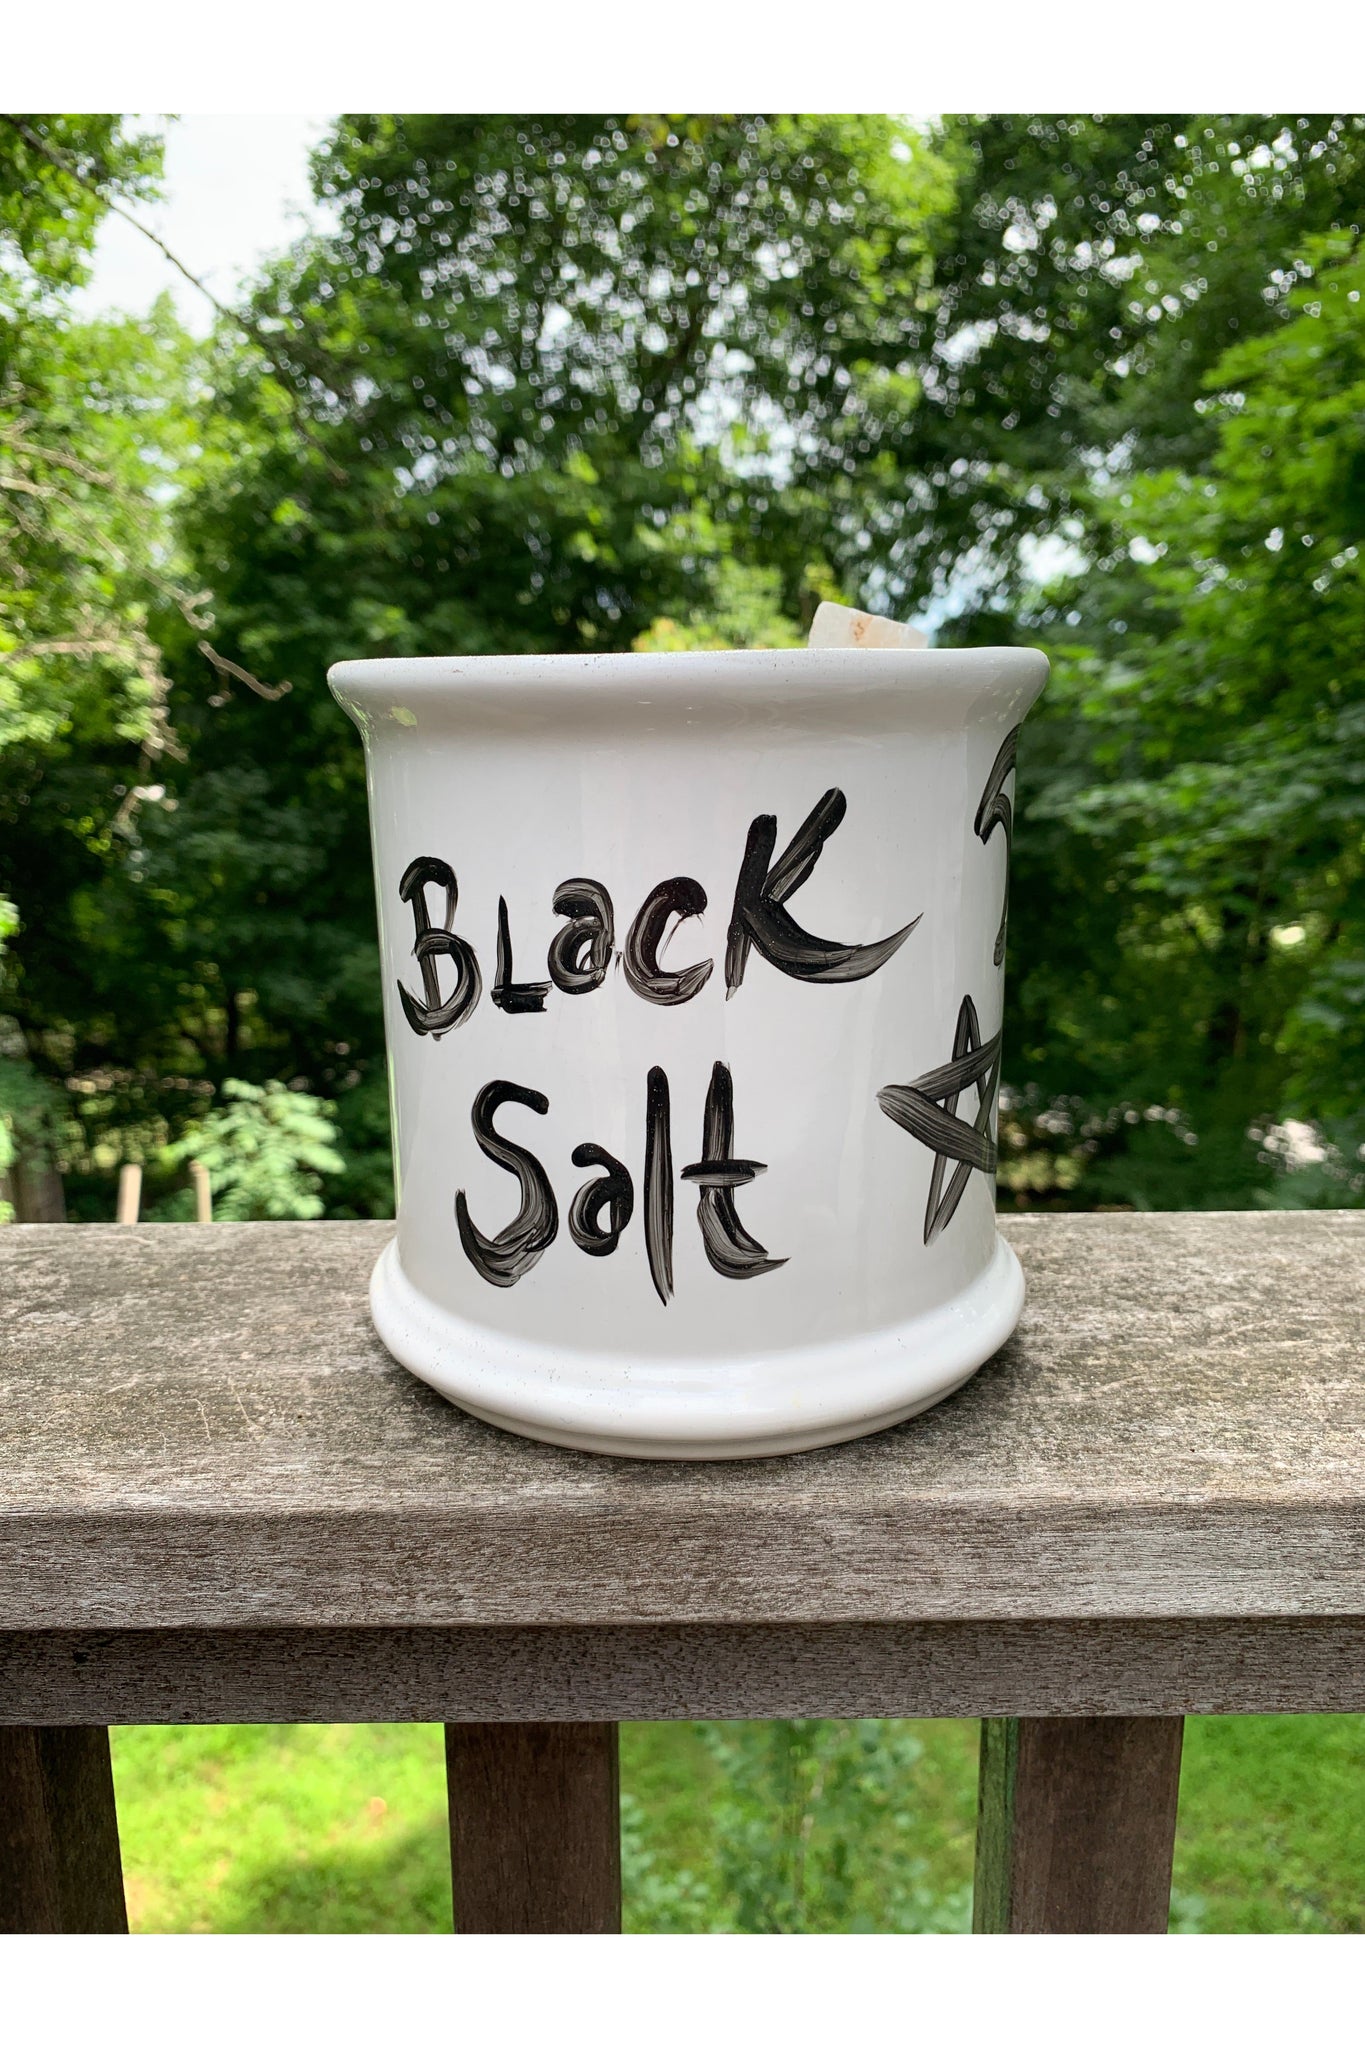 Black Salt for Protection Magic Majestic Hudson Lifestyle Experiences wellness